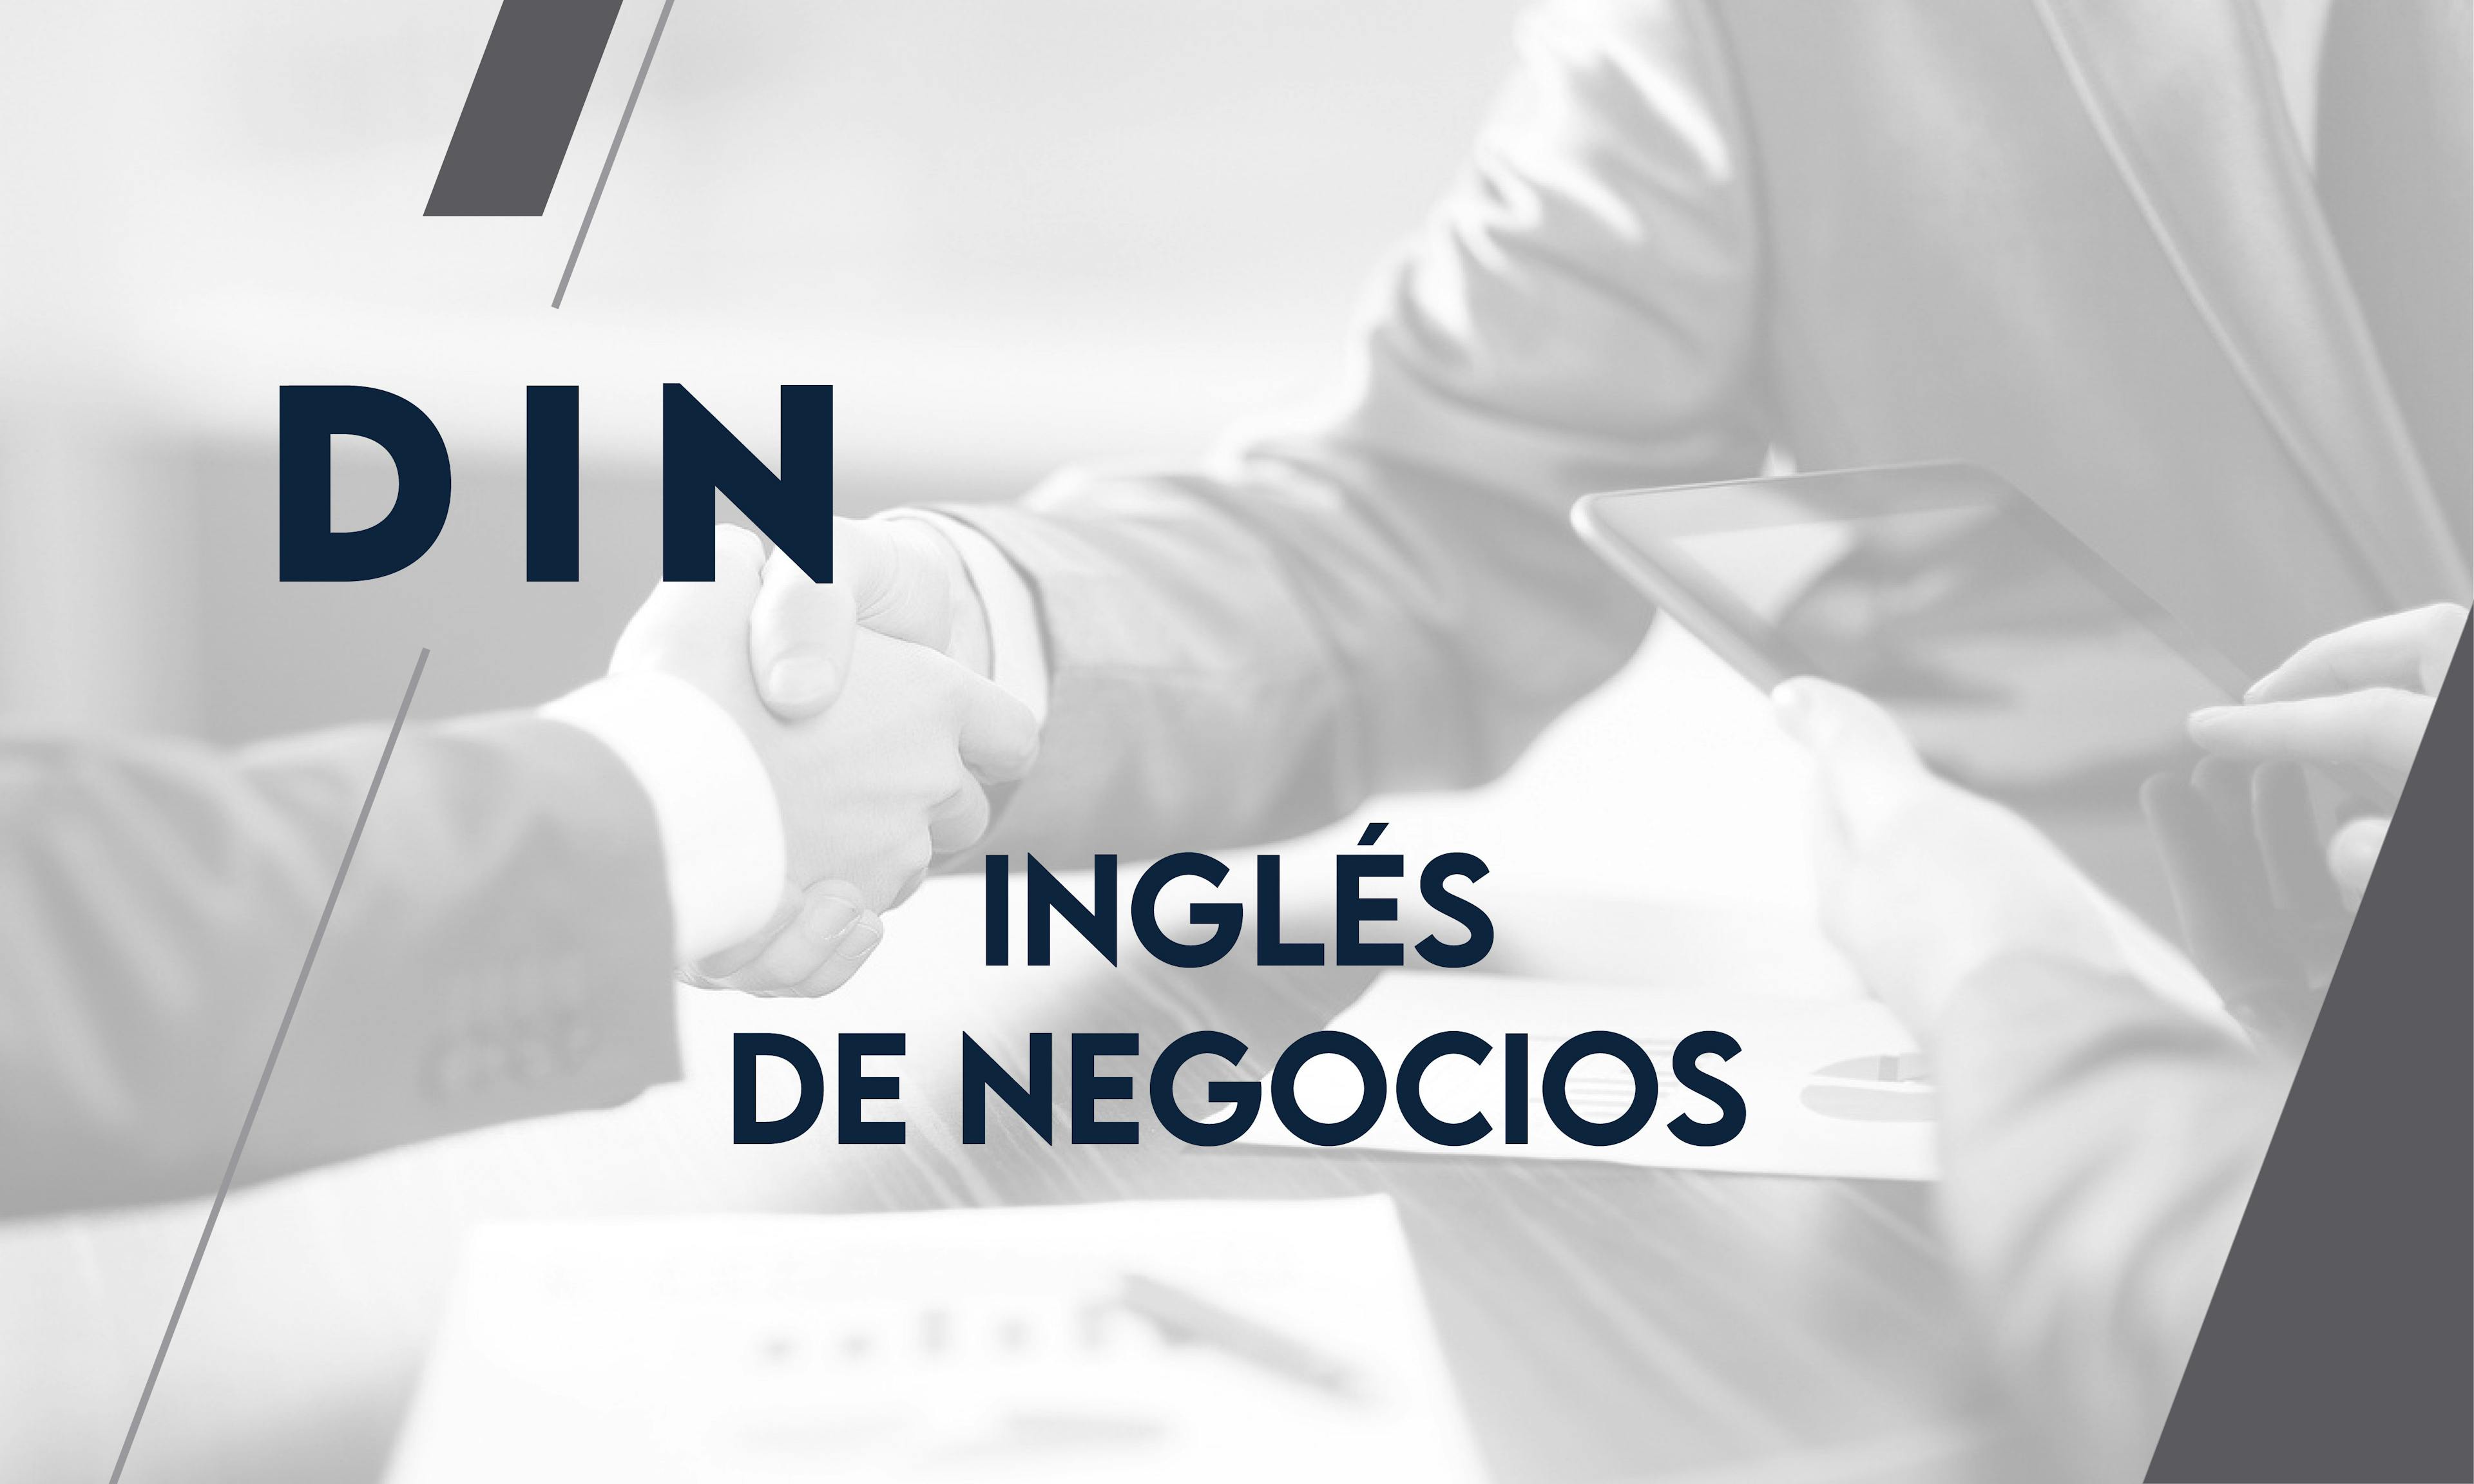 DIN - Inglés de Negocios